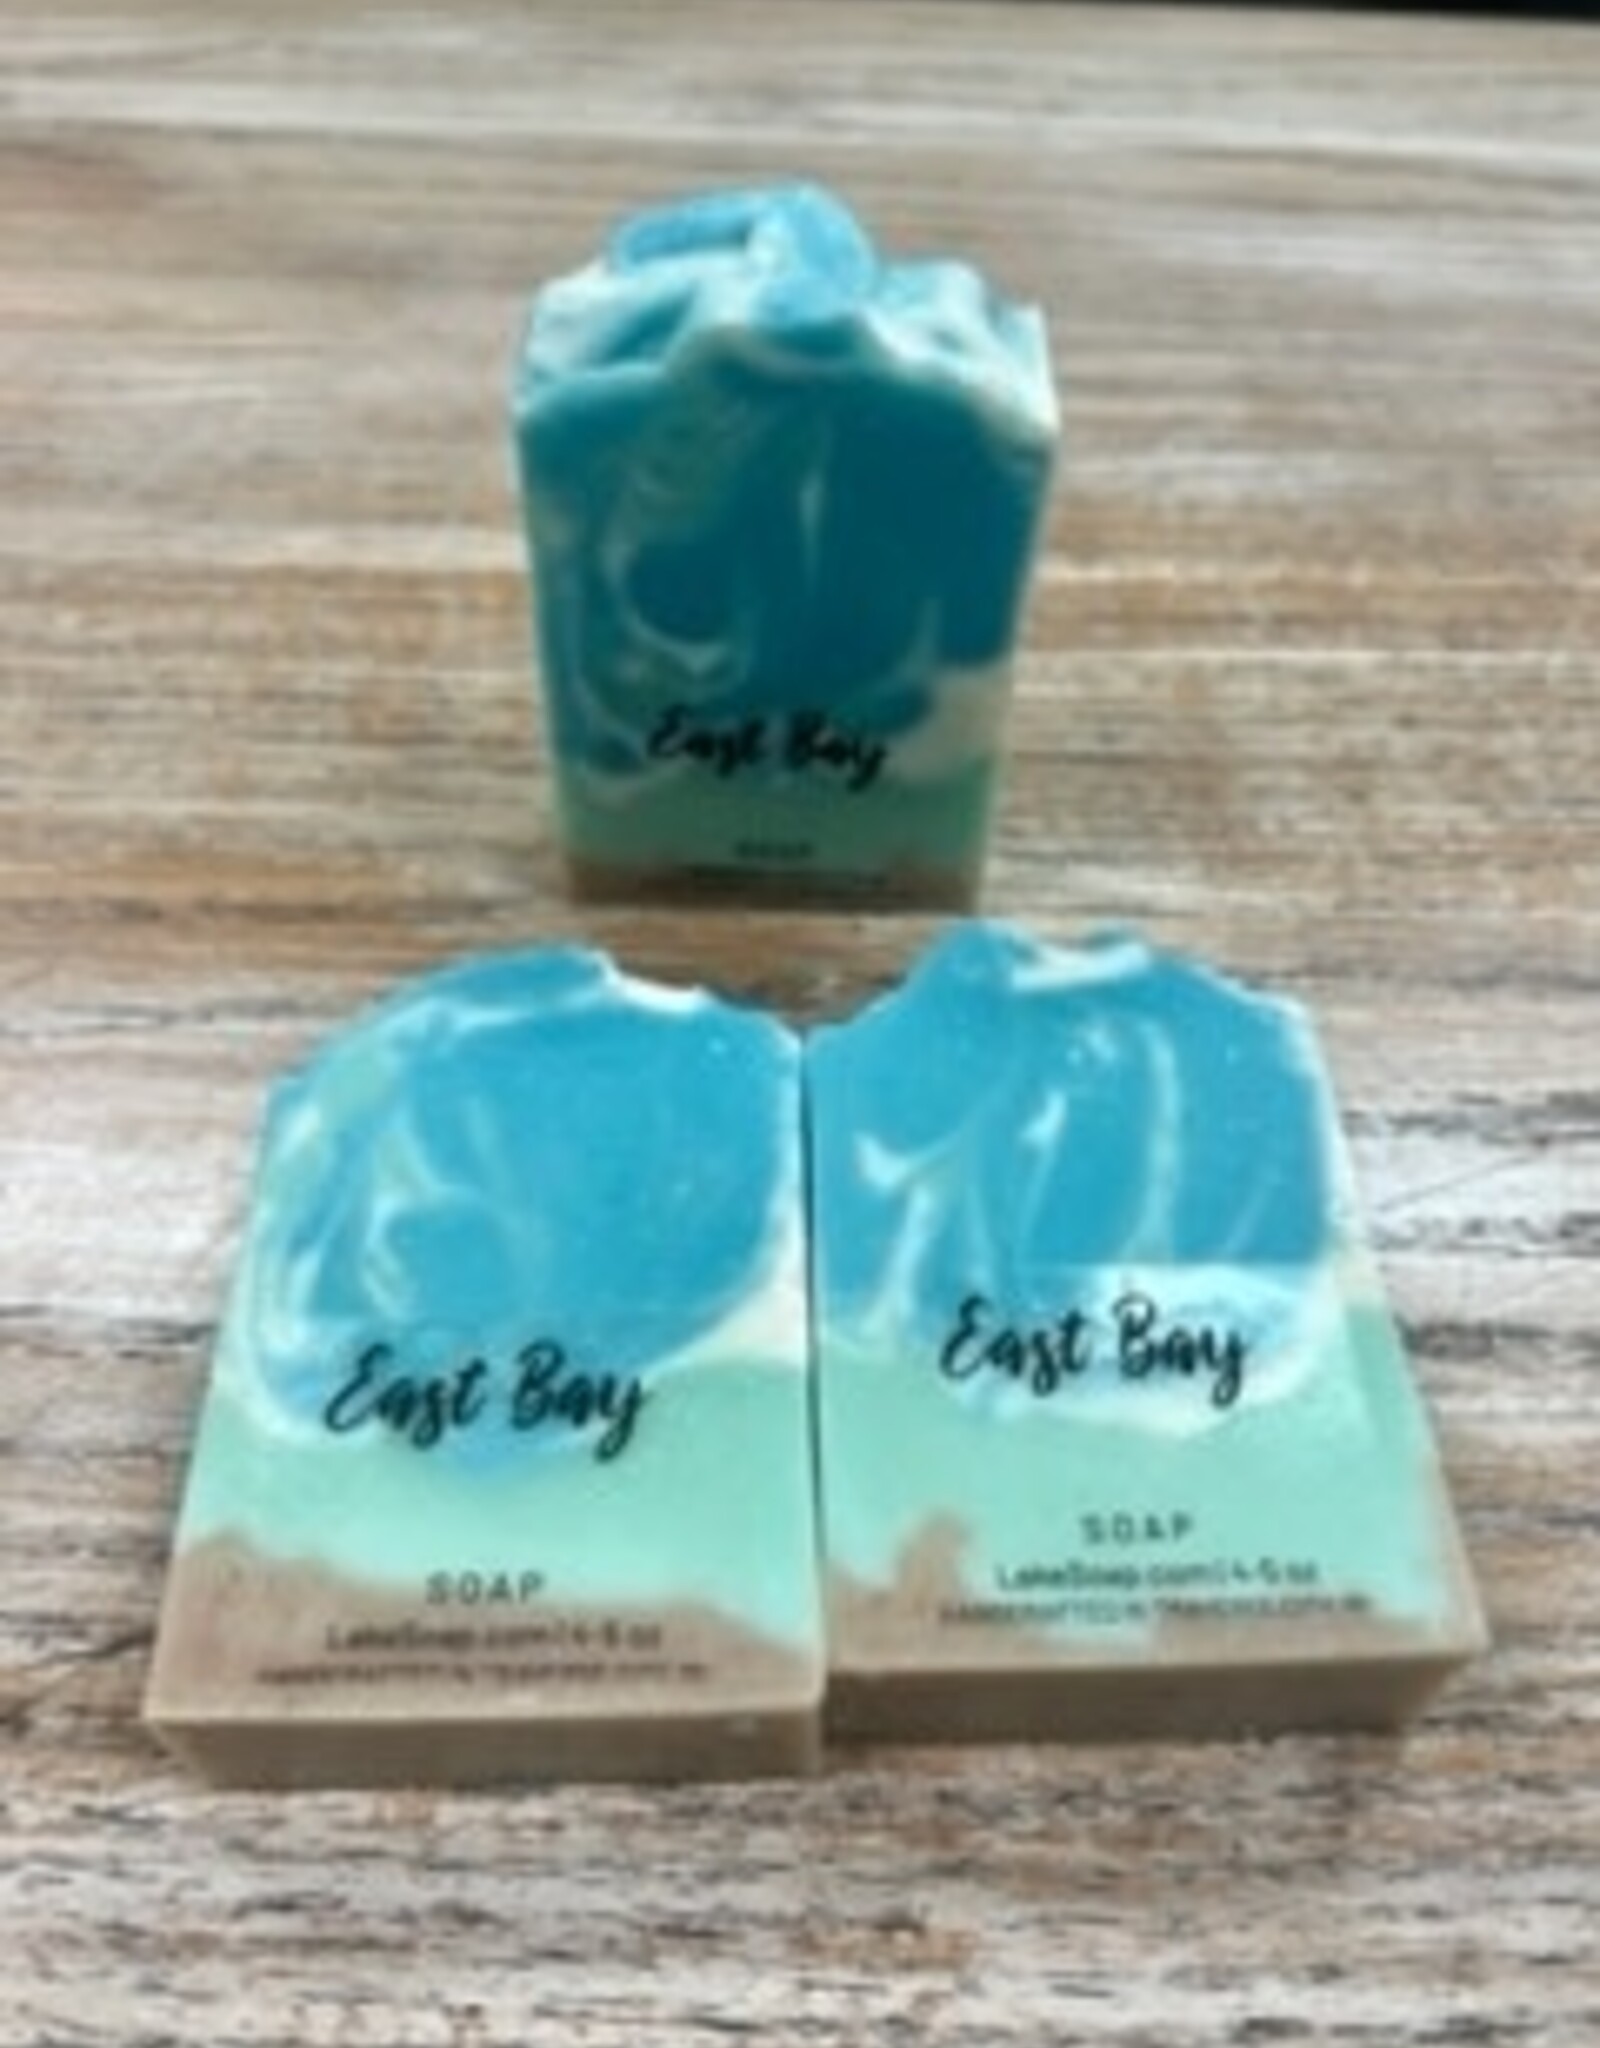 Beauty LSC East Bay Soap